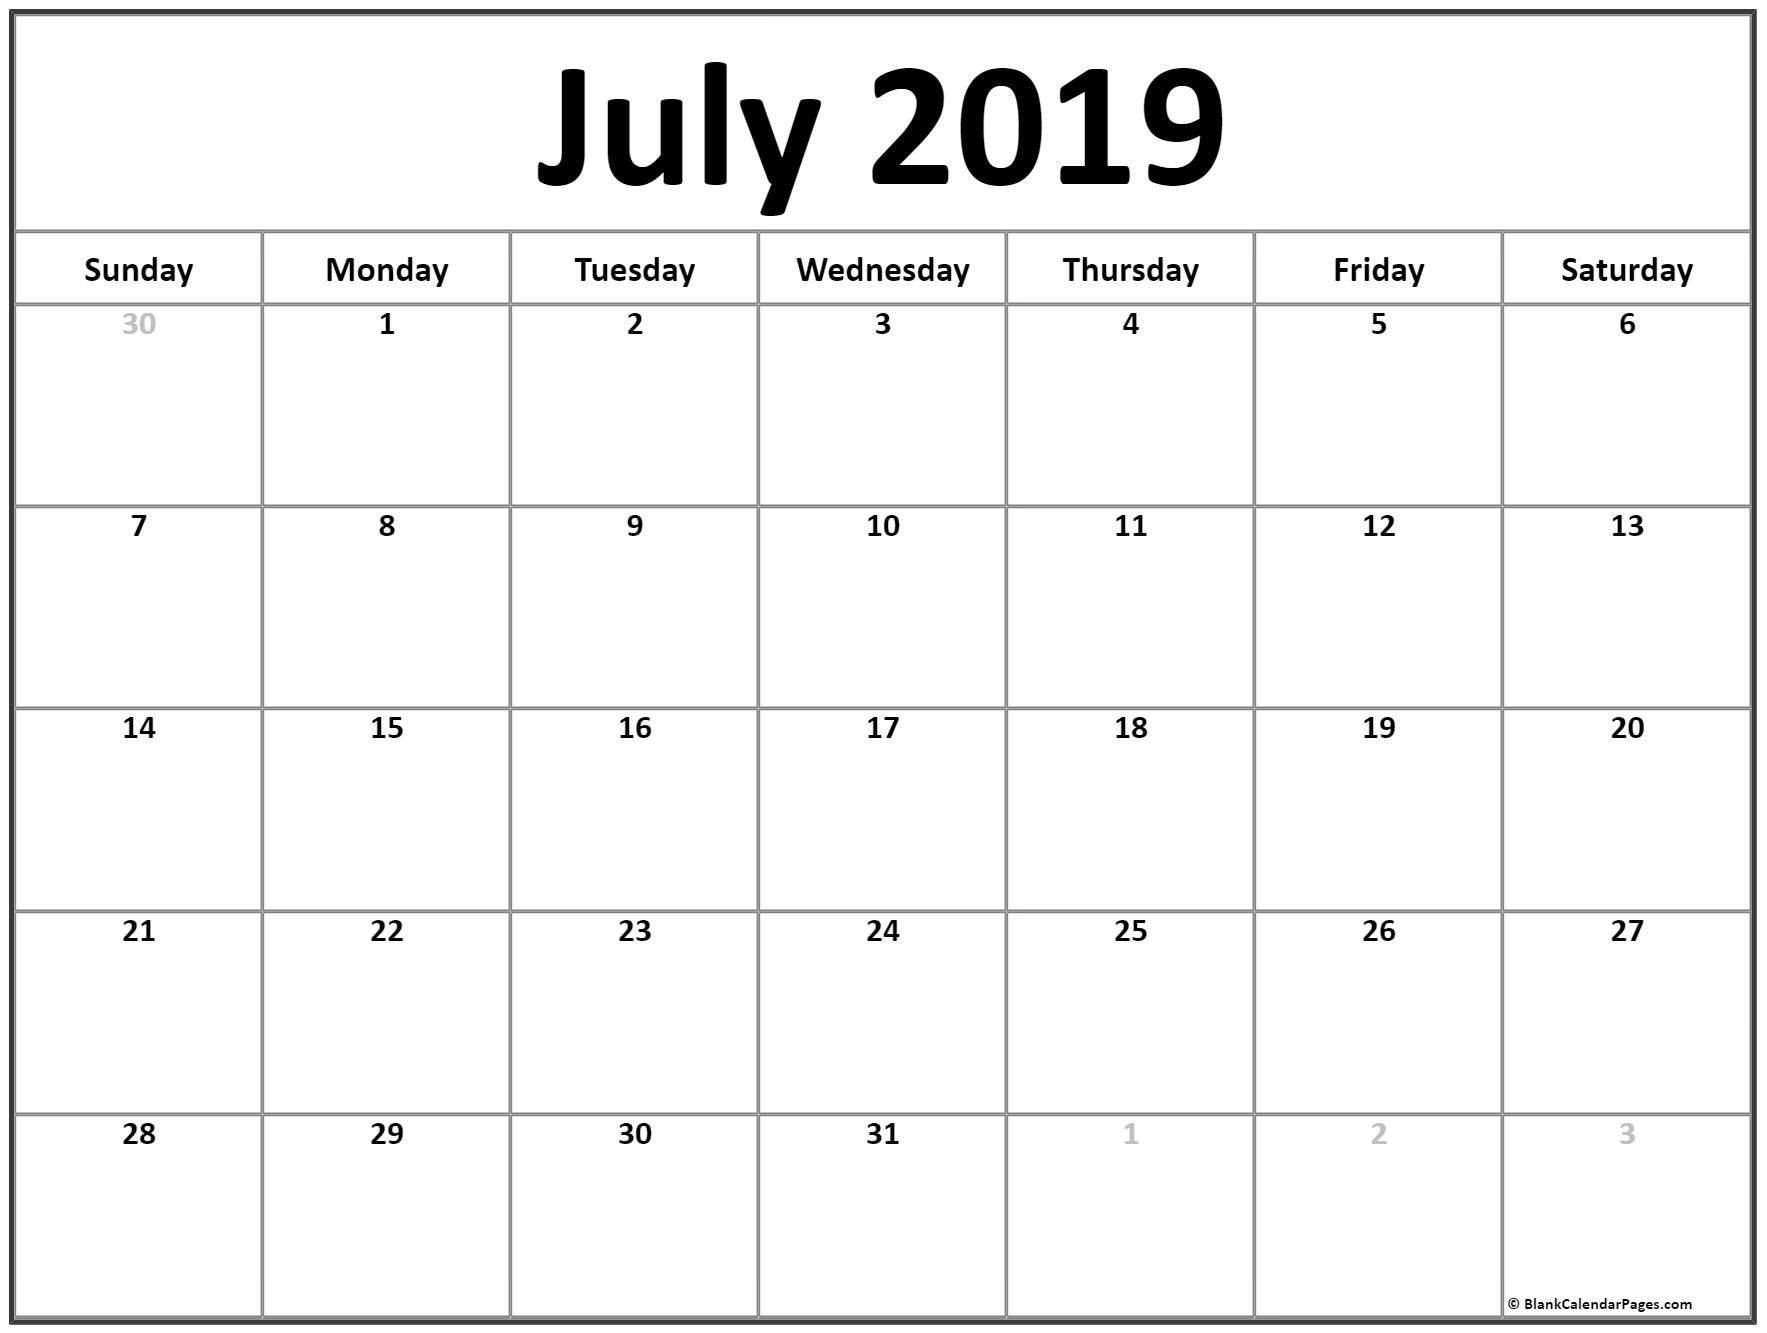 July 2019 Blank Calendar Template | 2019 July Calendar